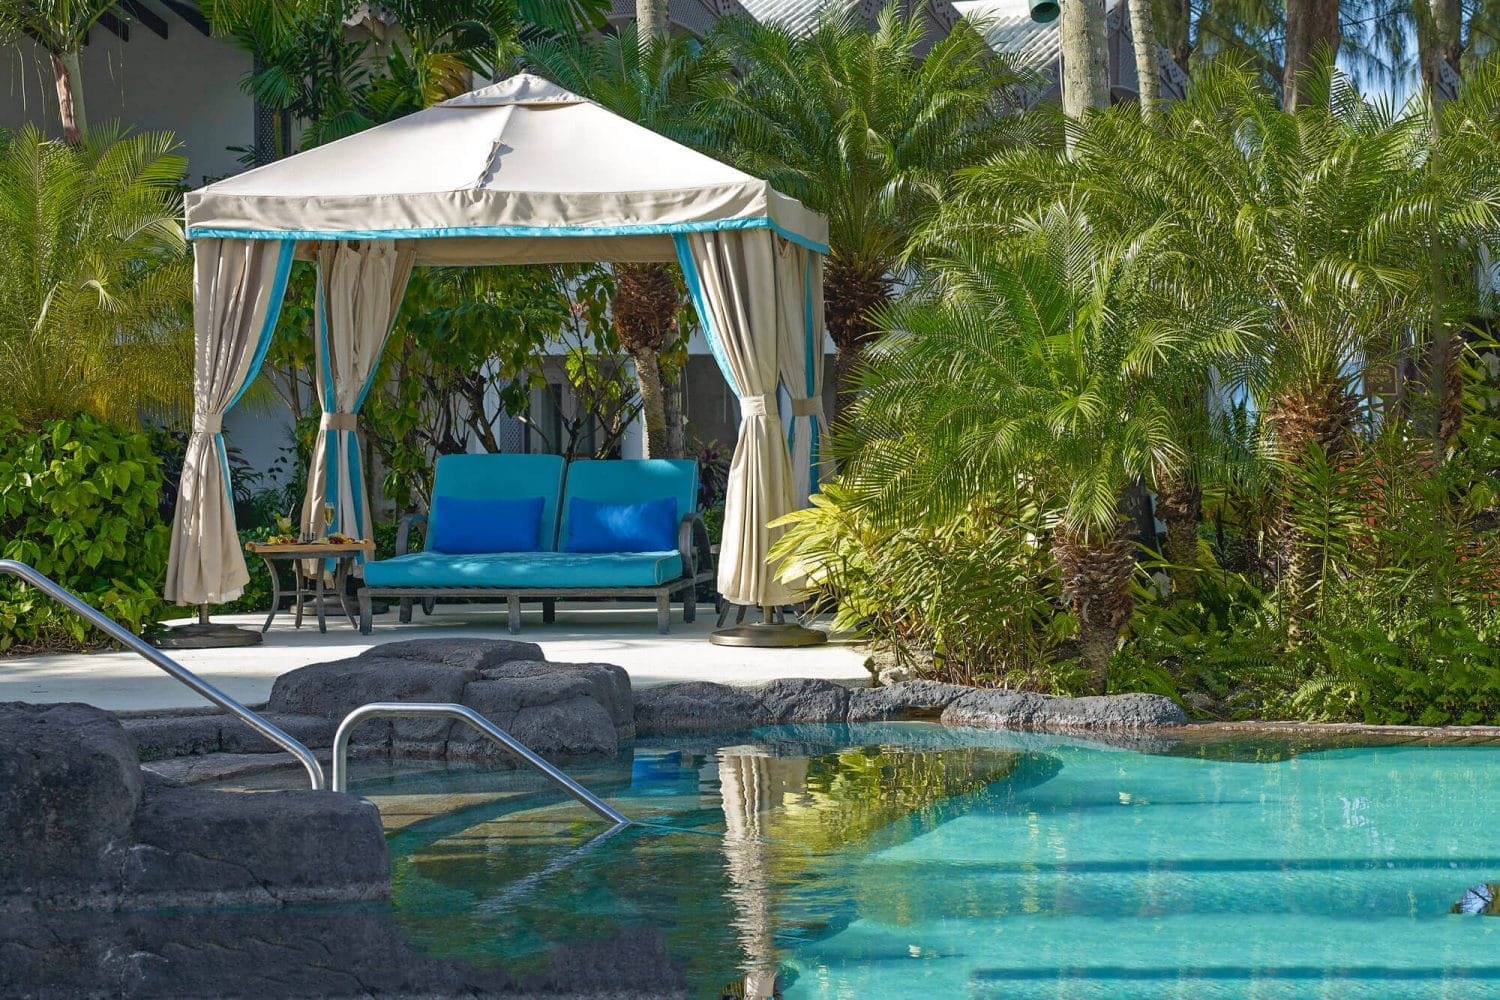 Best Luxury Hotels in Barbados - Colony Club Pool Gazebo